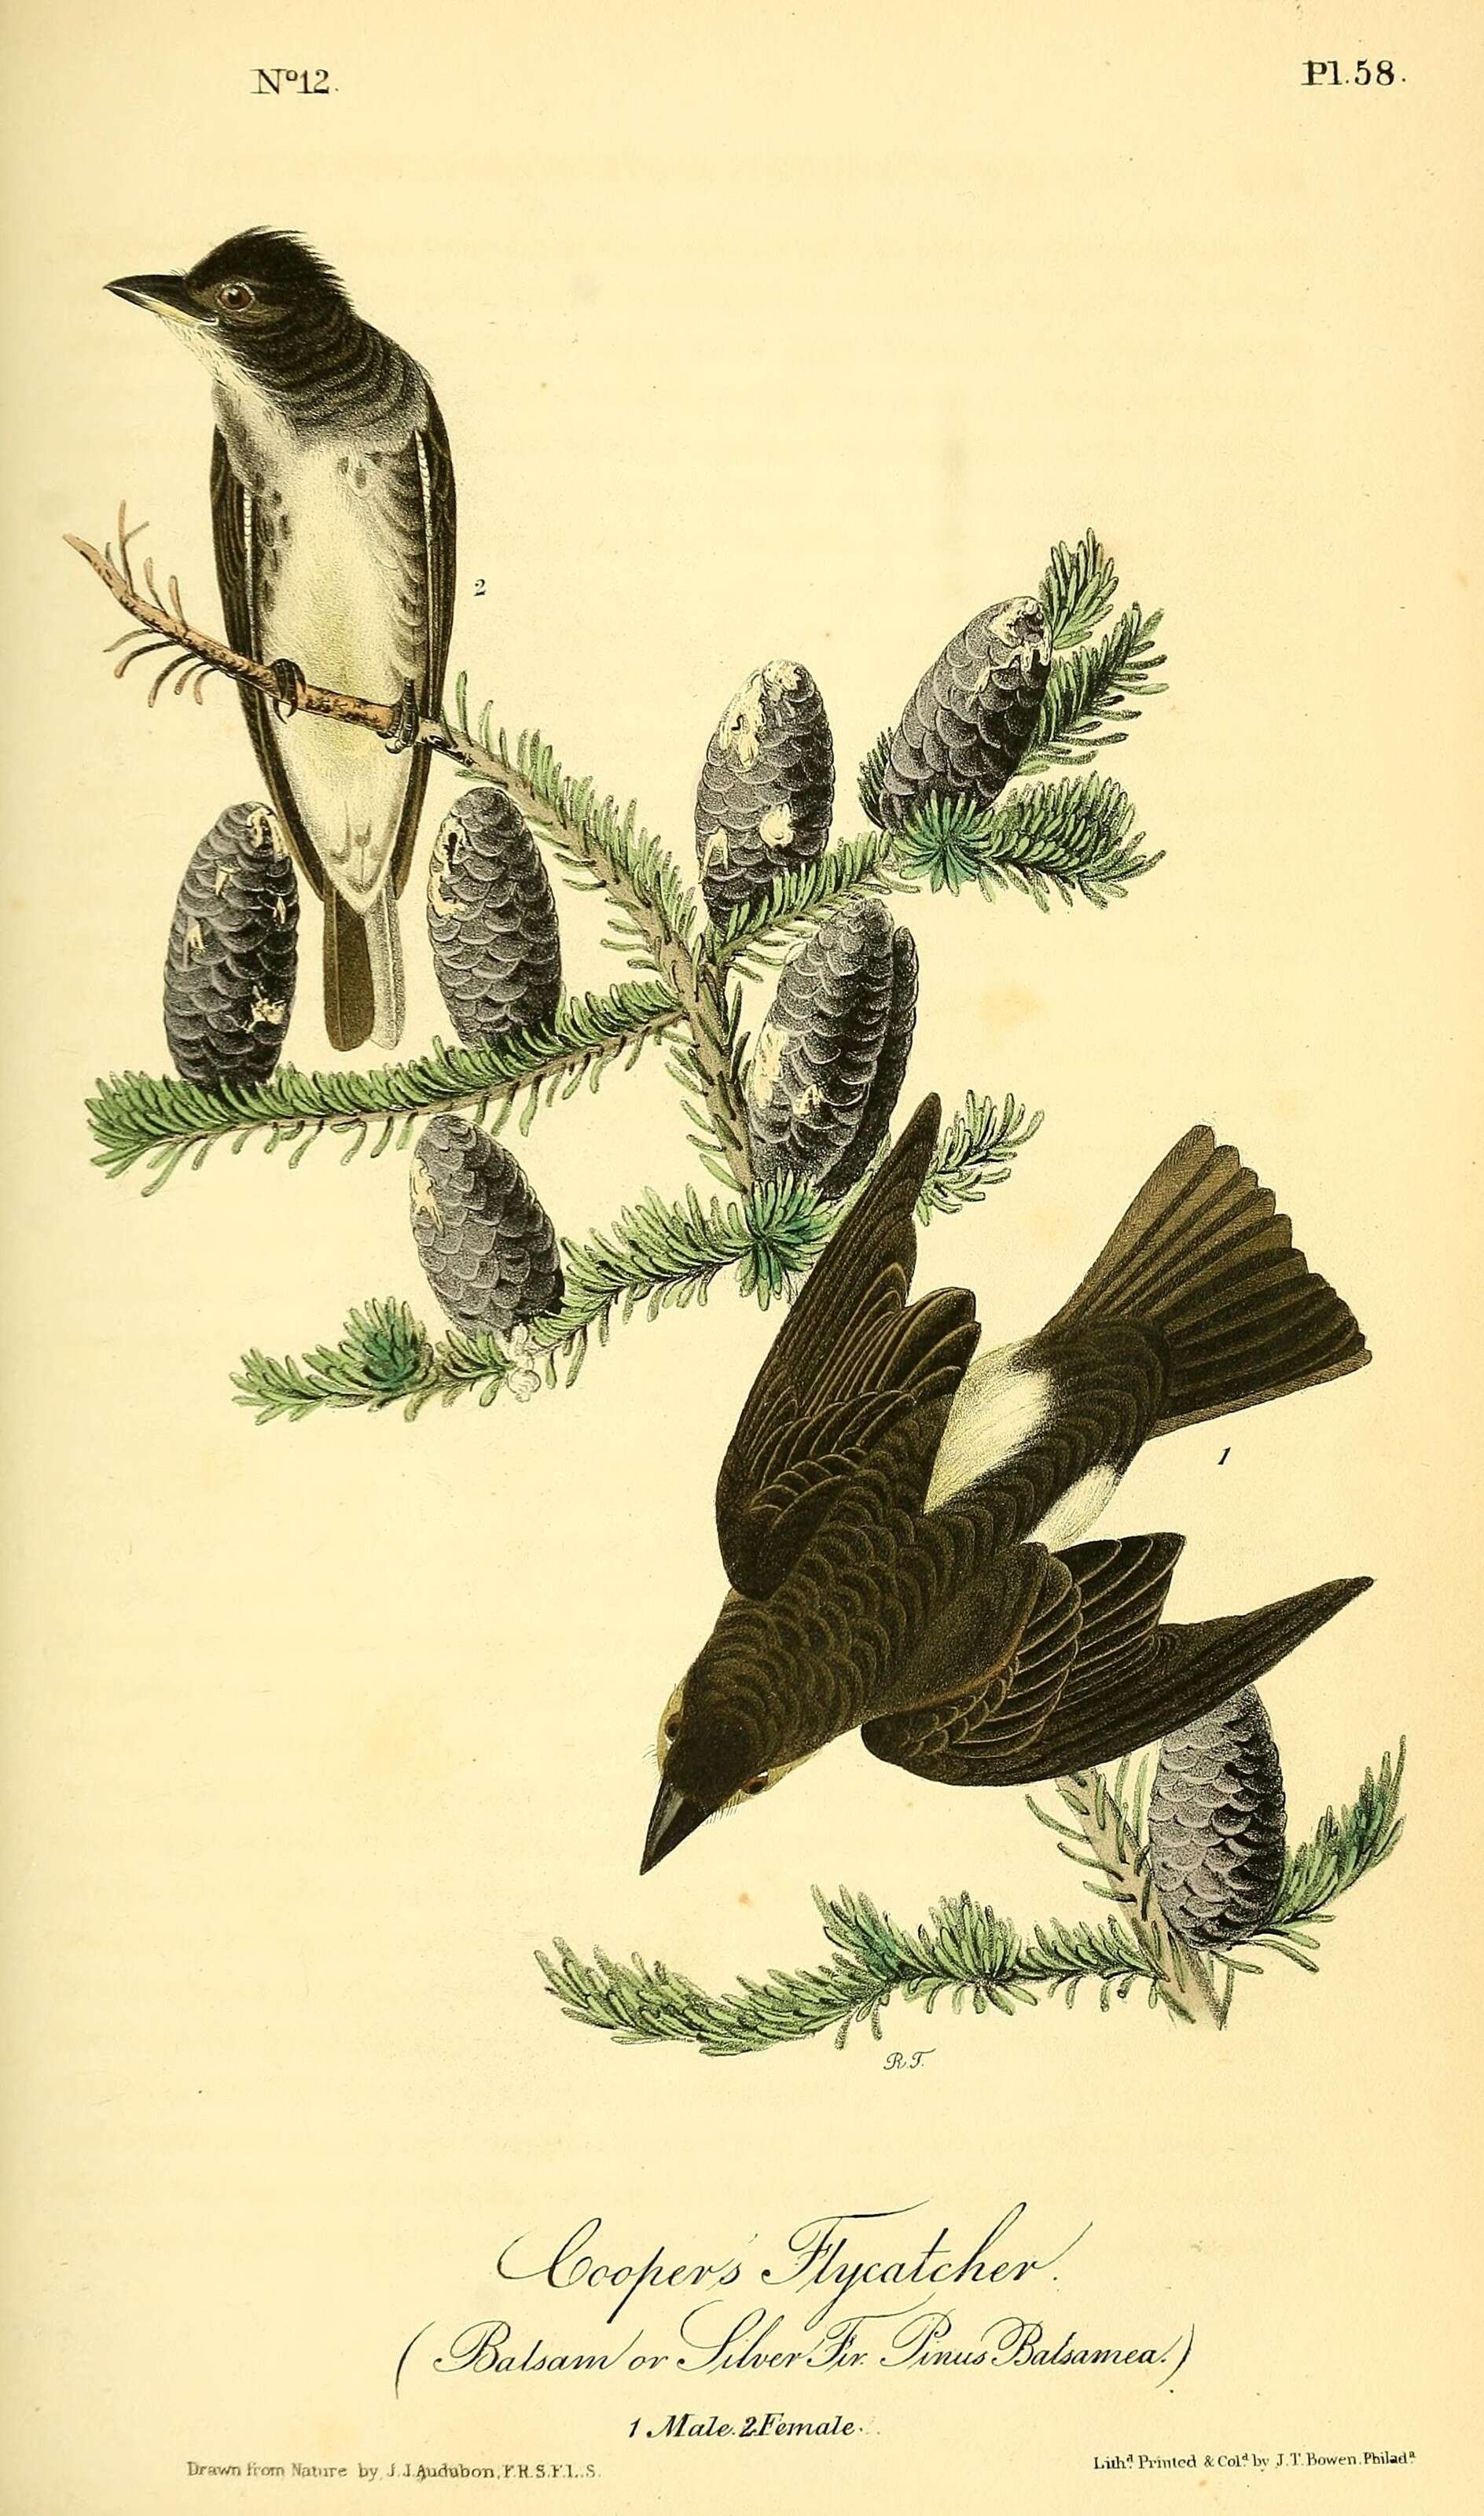 Image of Olive-Sided Flycatcher